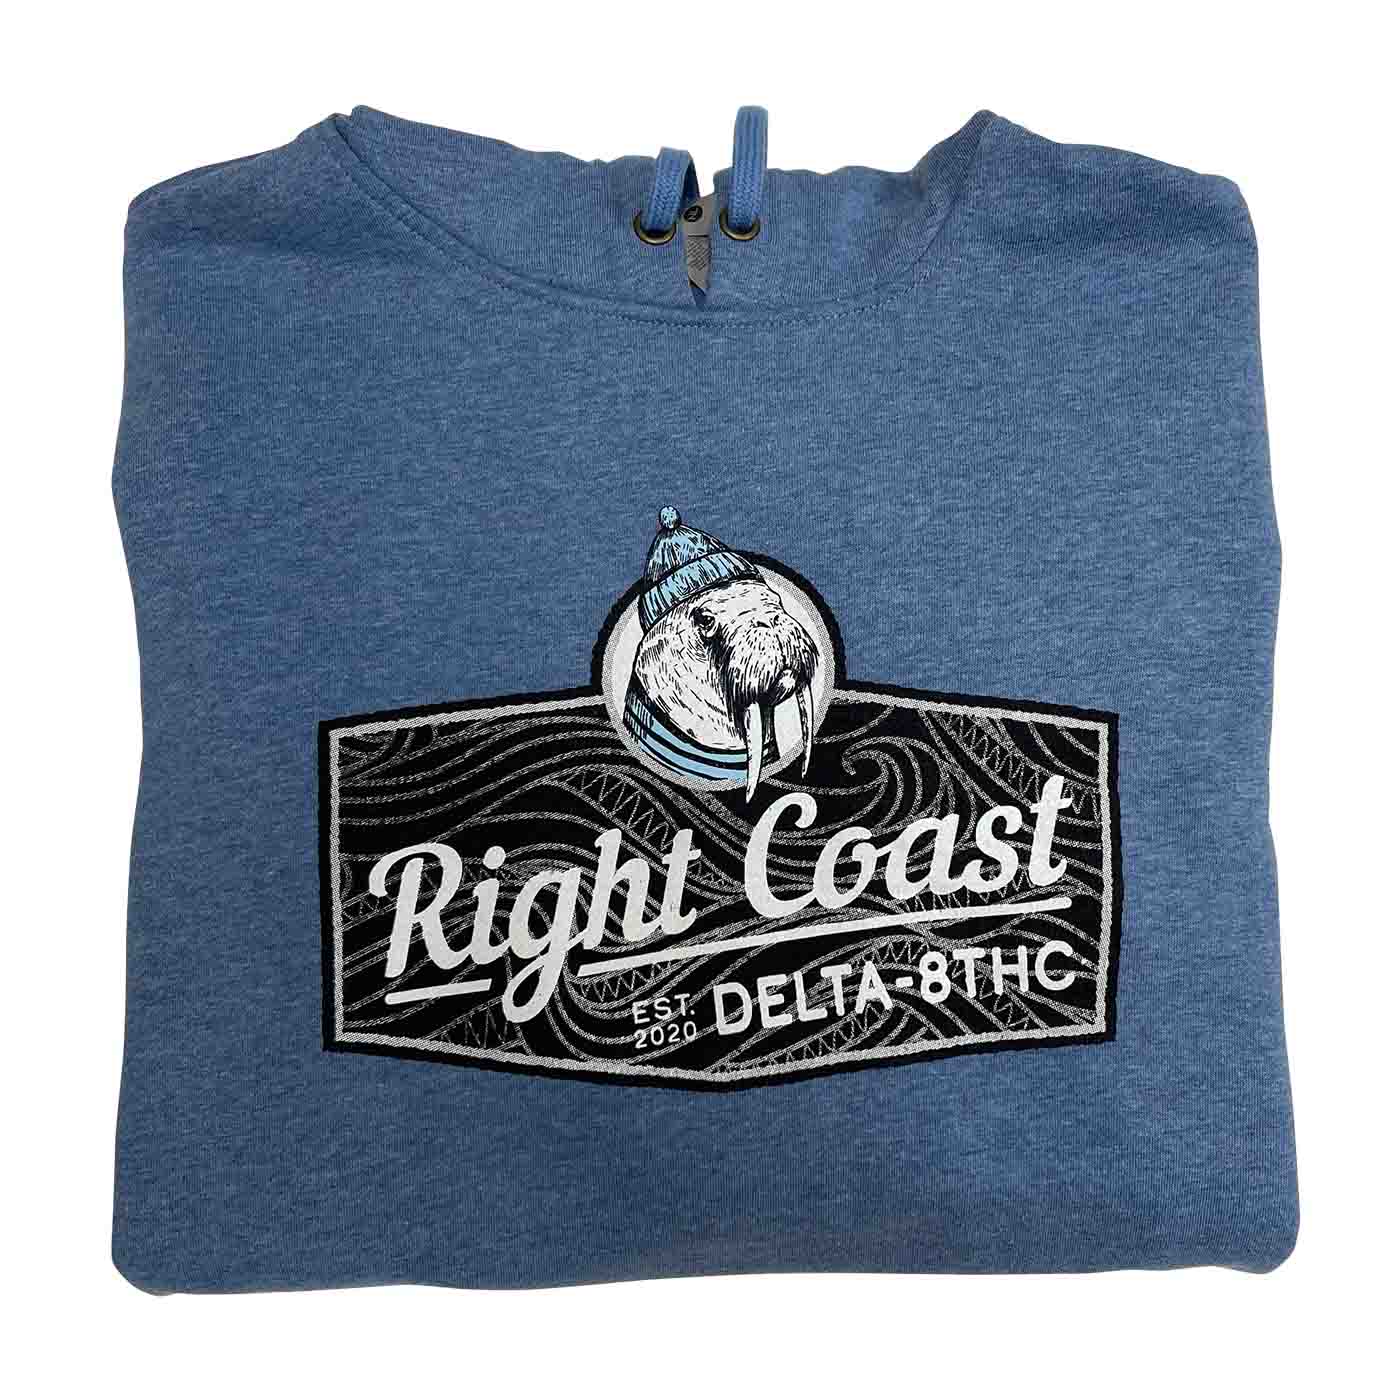 Right Coast Delta-8 THC sweatshirt.